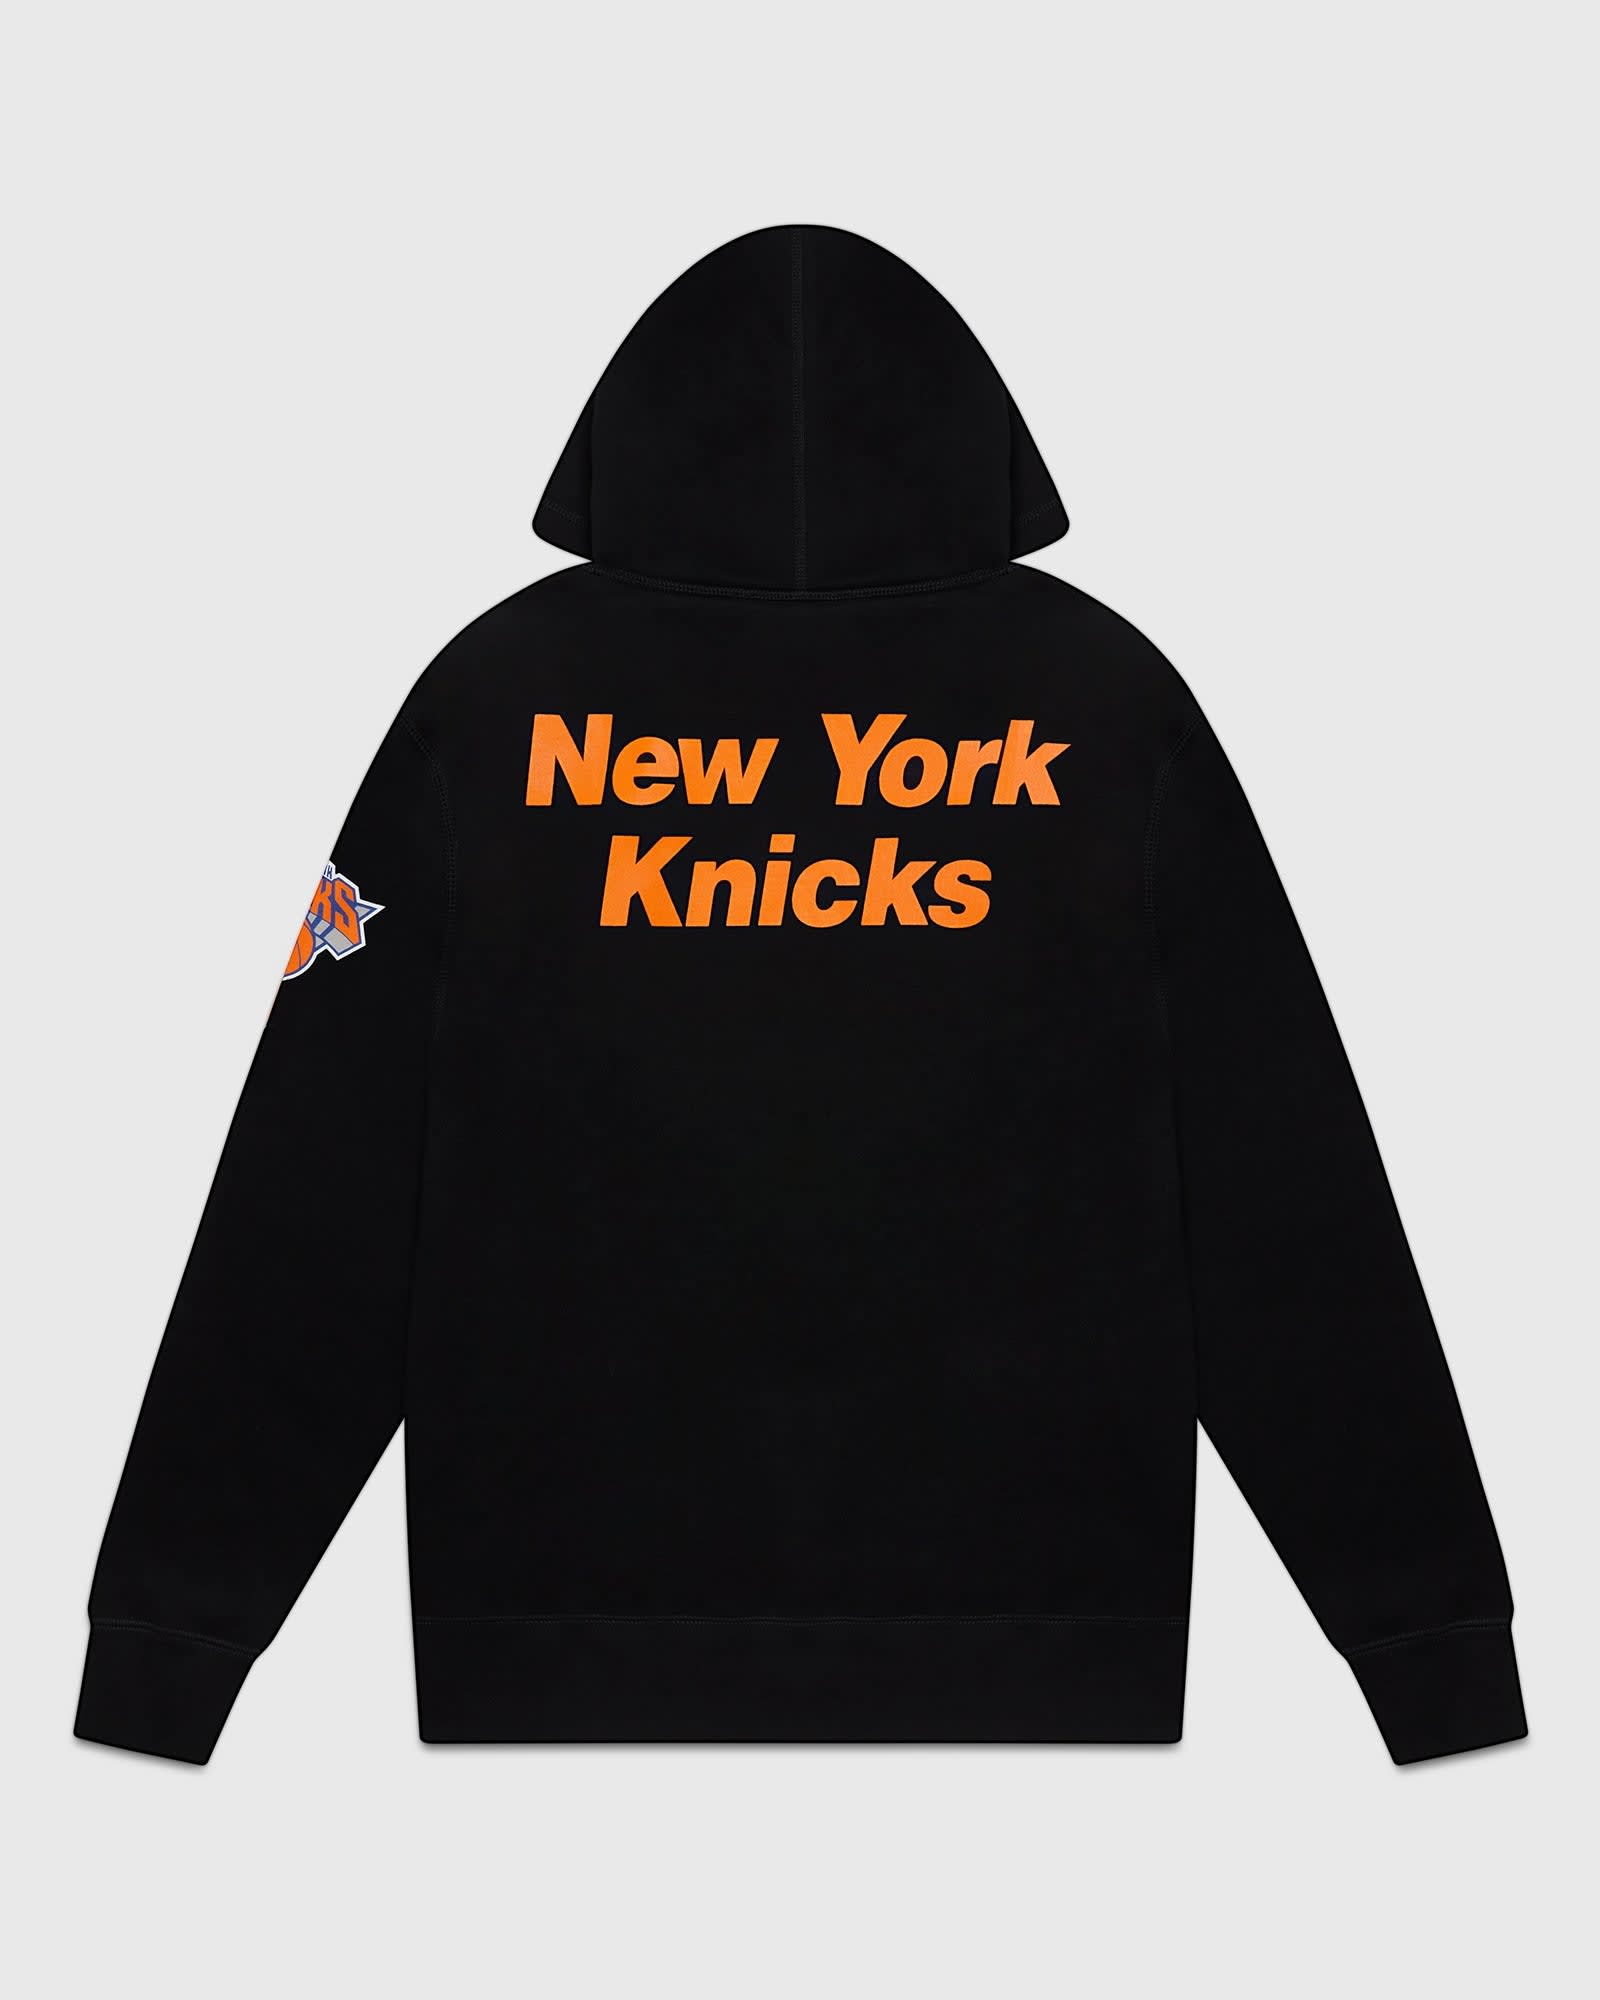 NBA NEW YORK KNICKS OG HOODIE